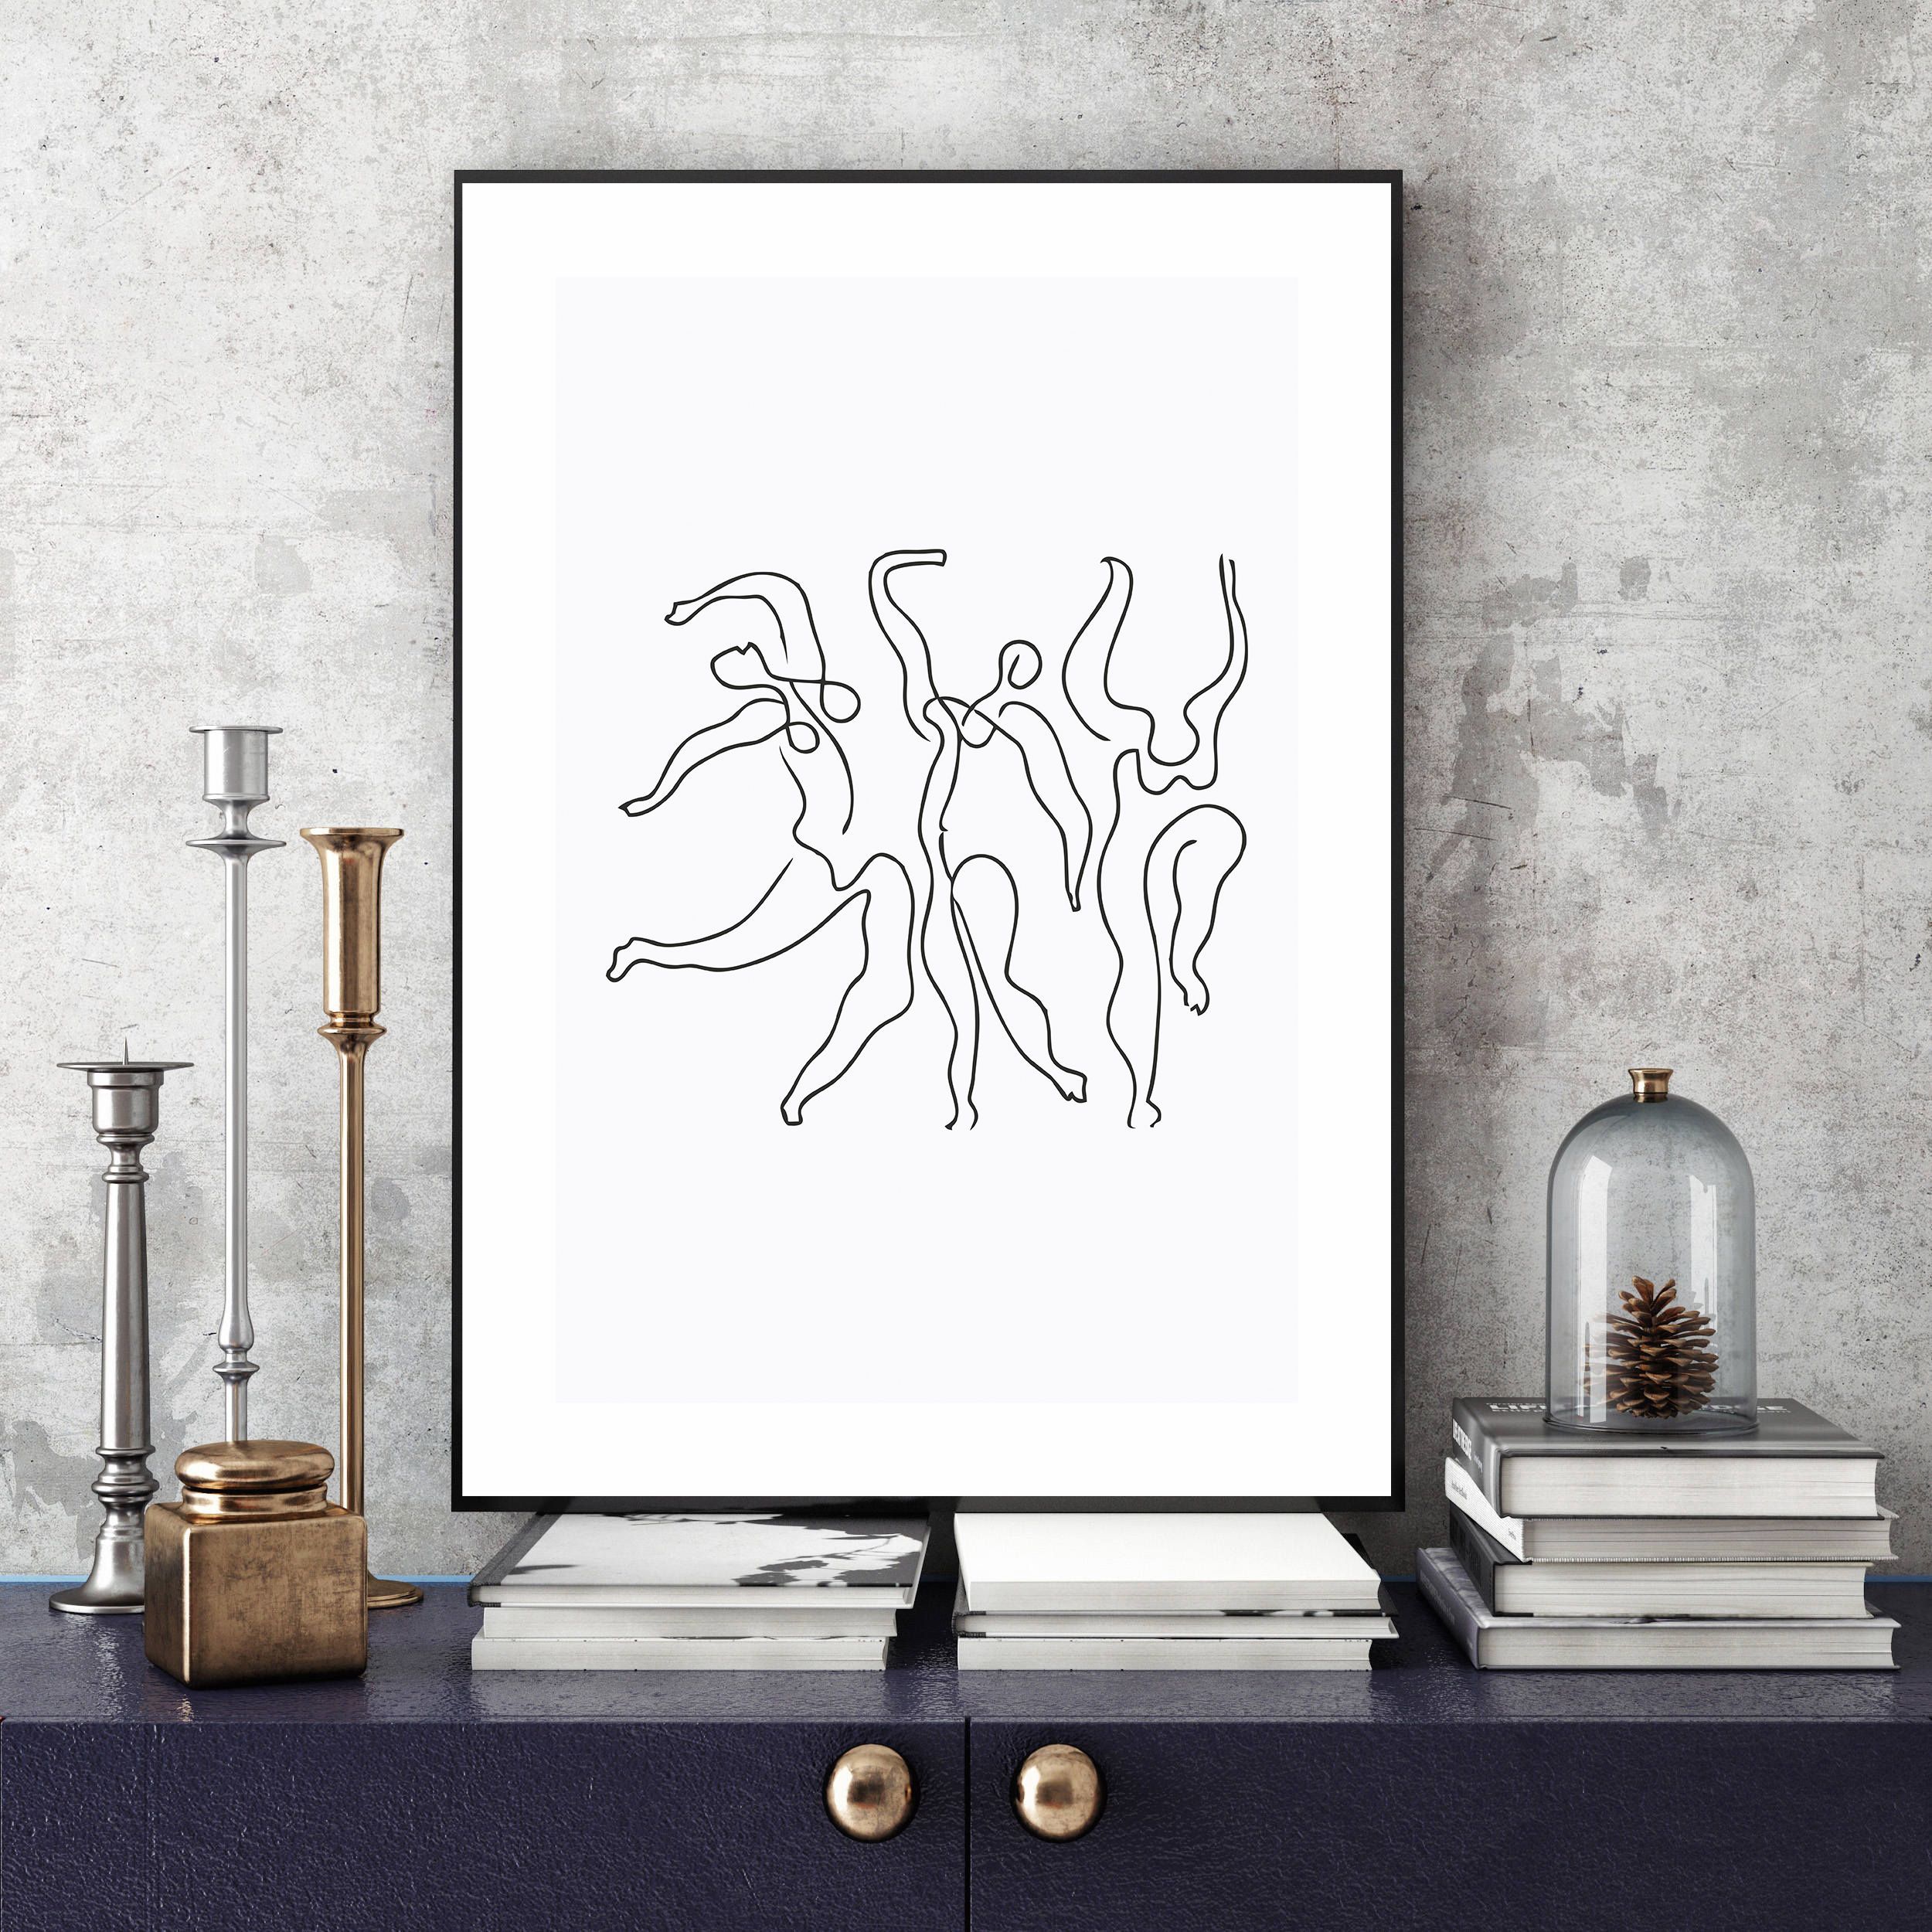 Постер "Три танцовщицы Пикассо" от Интернет магазина Милота